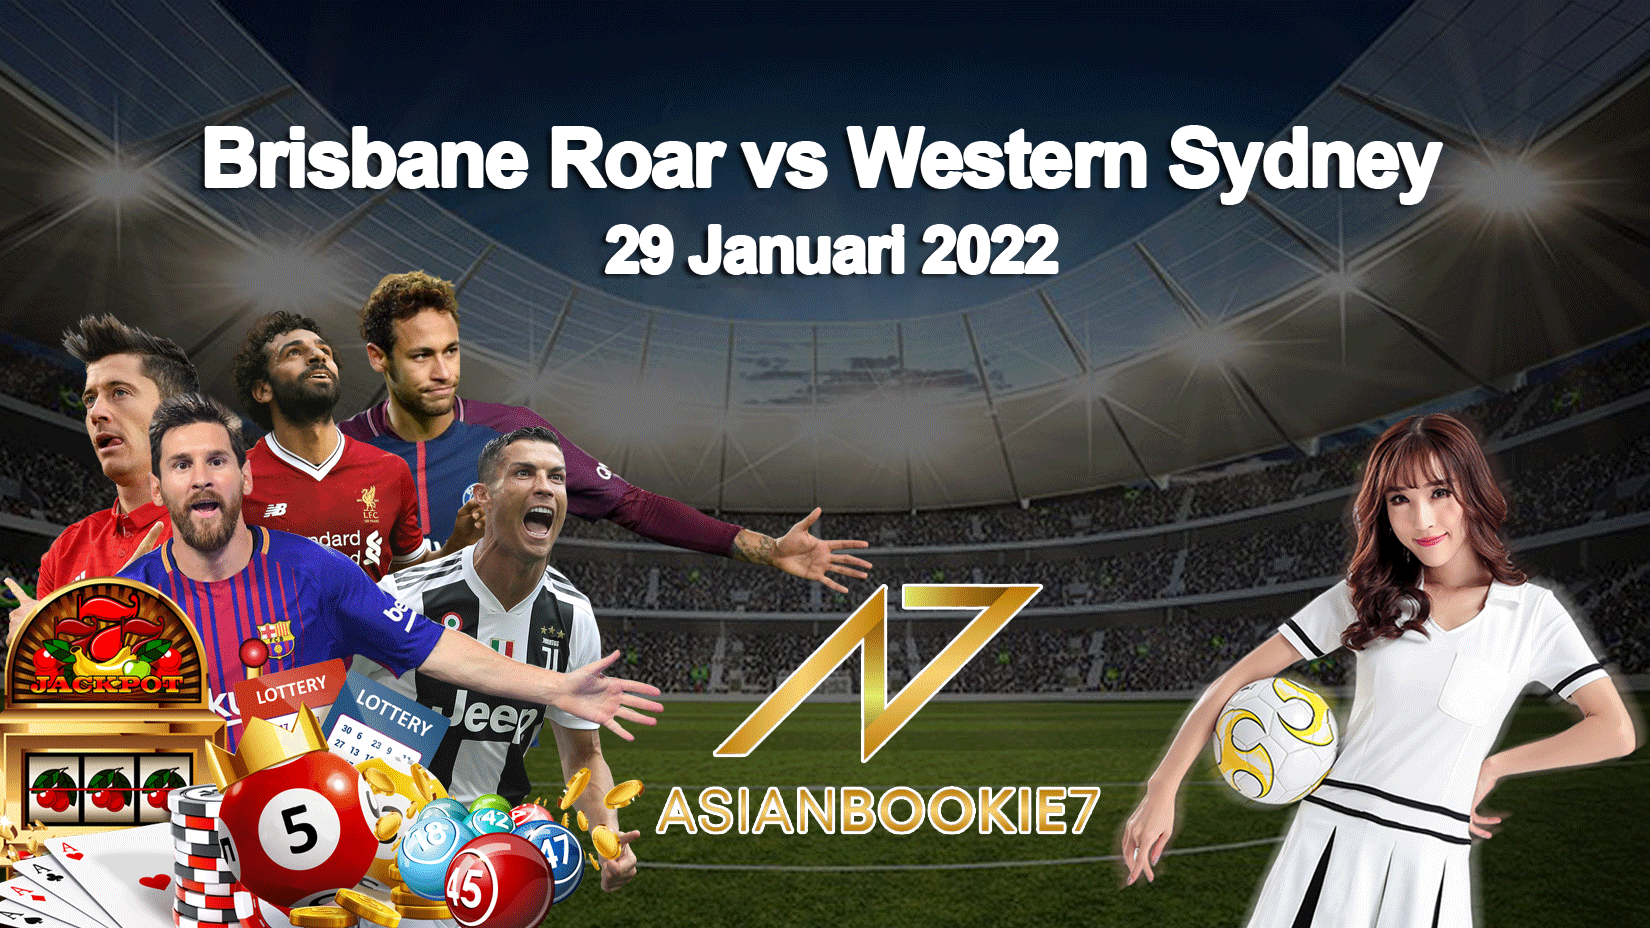 Prediksi-Brisbane-Roar-vs-Western-Sydney-29-Januari-2022